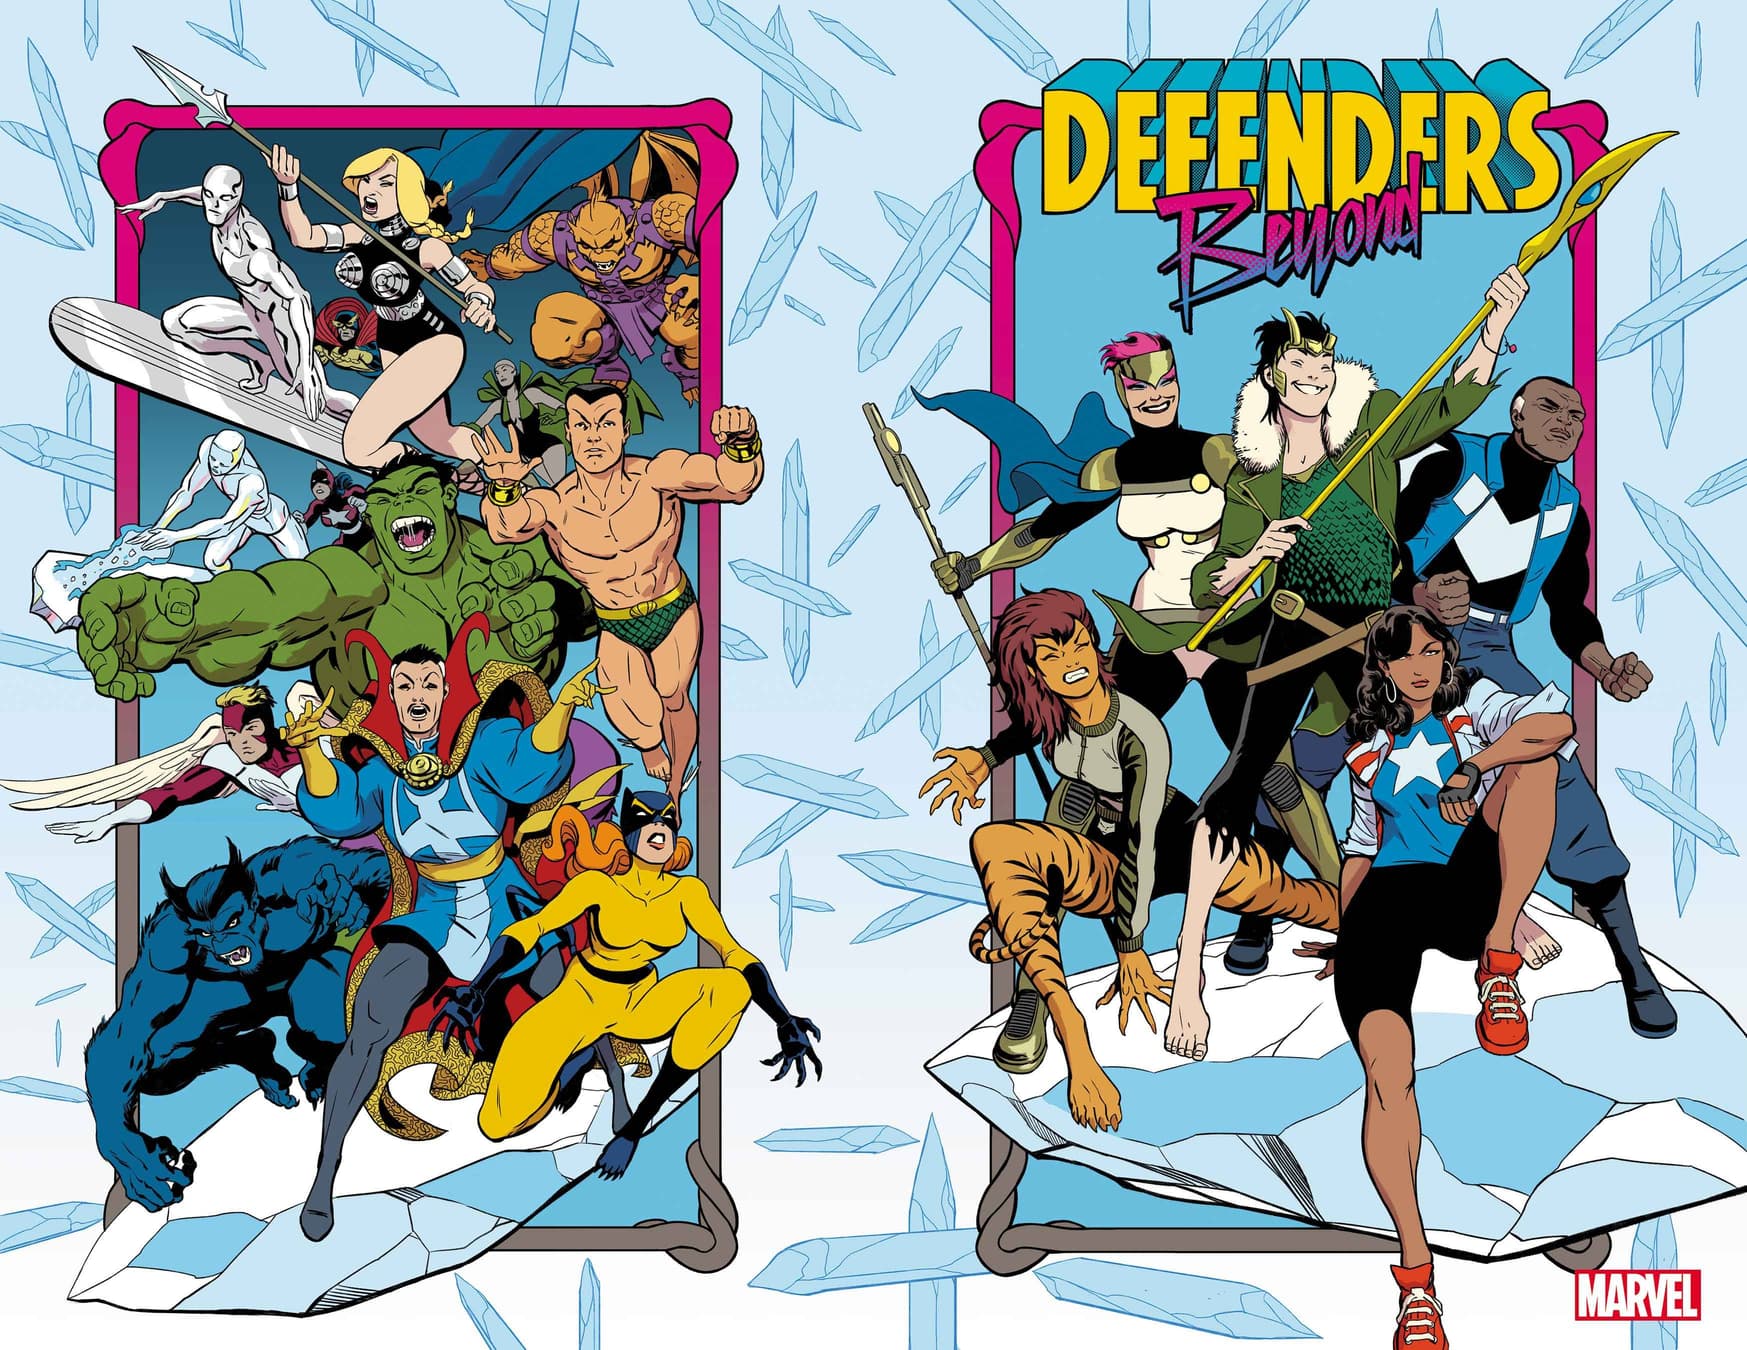 Defenders: Beyond #1 wraparound cover by Javier Rodríguez